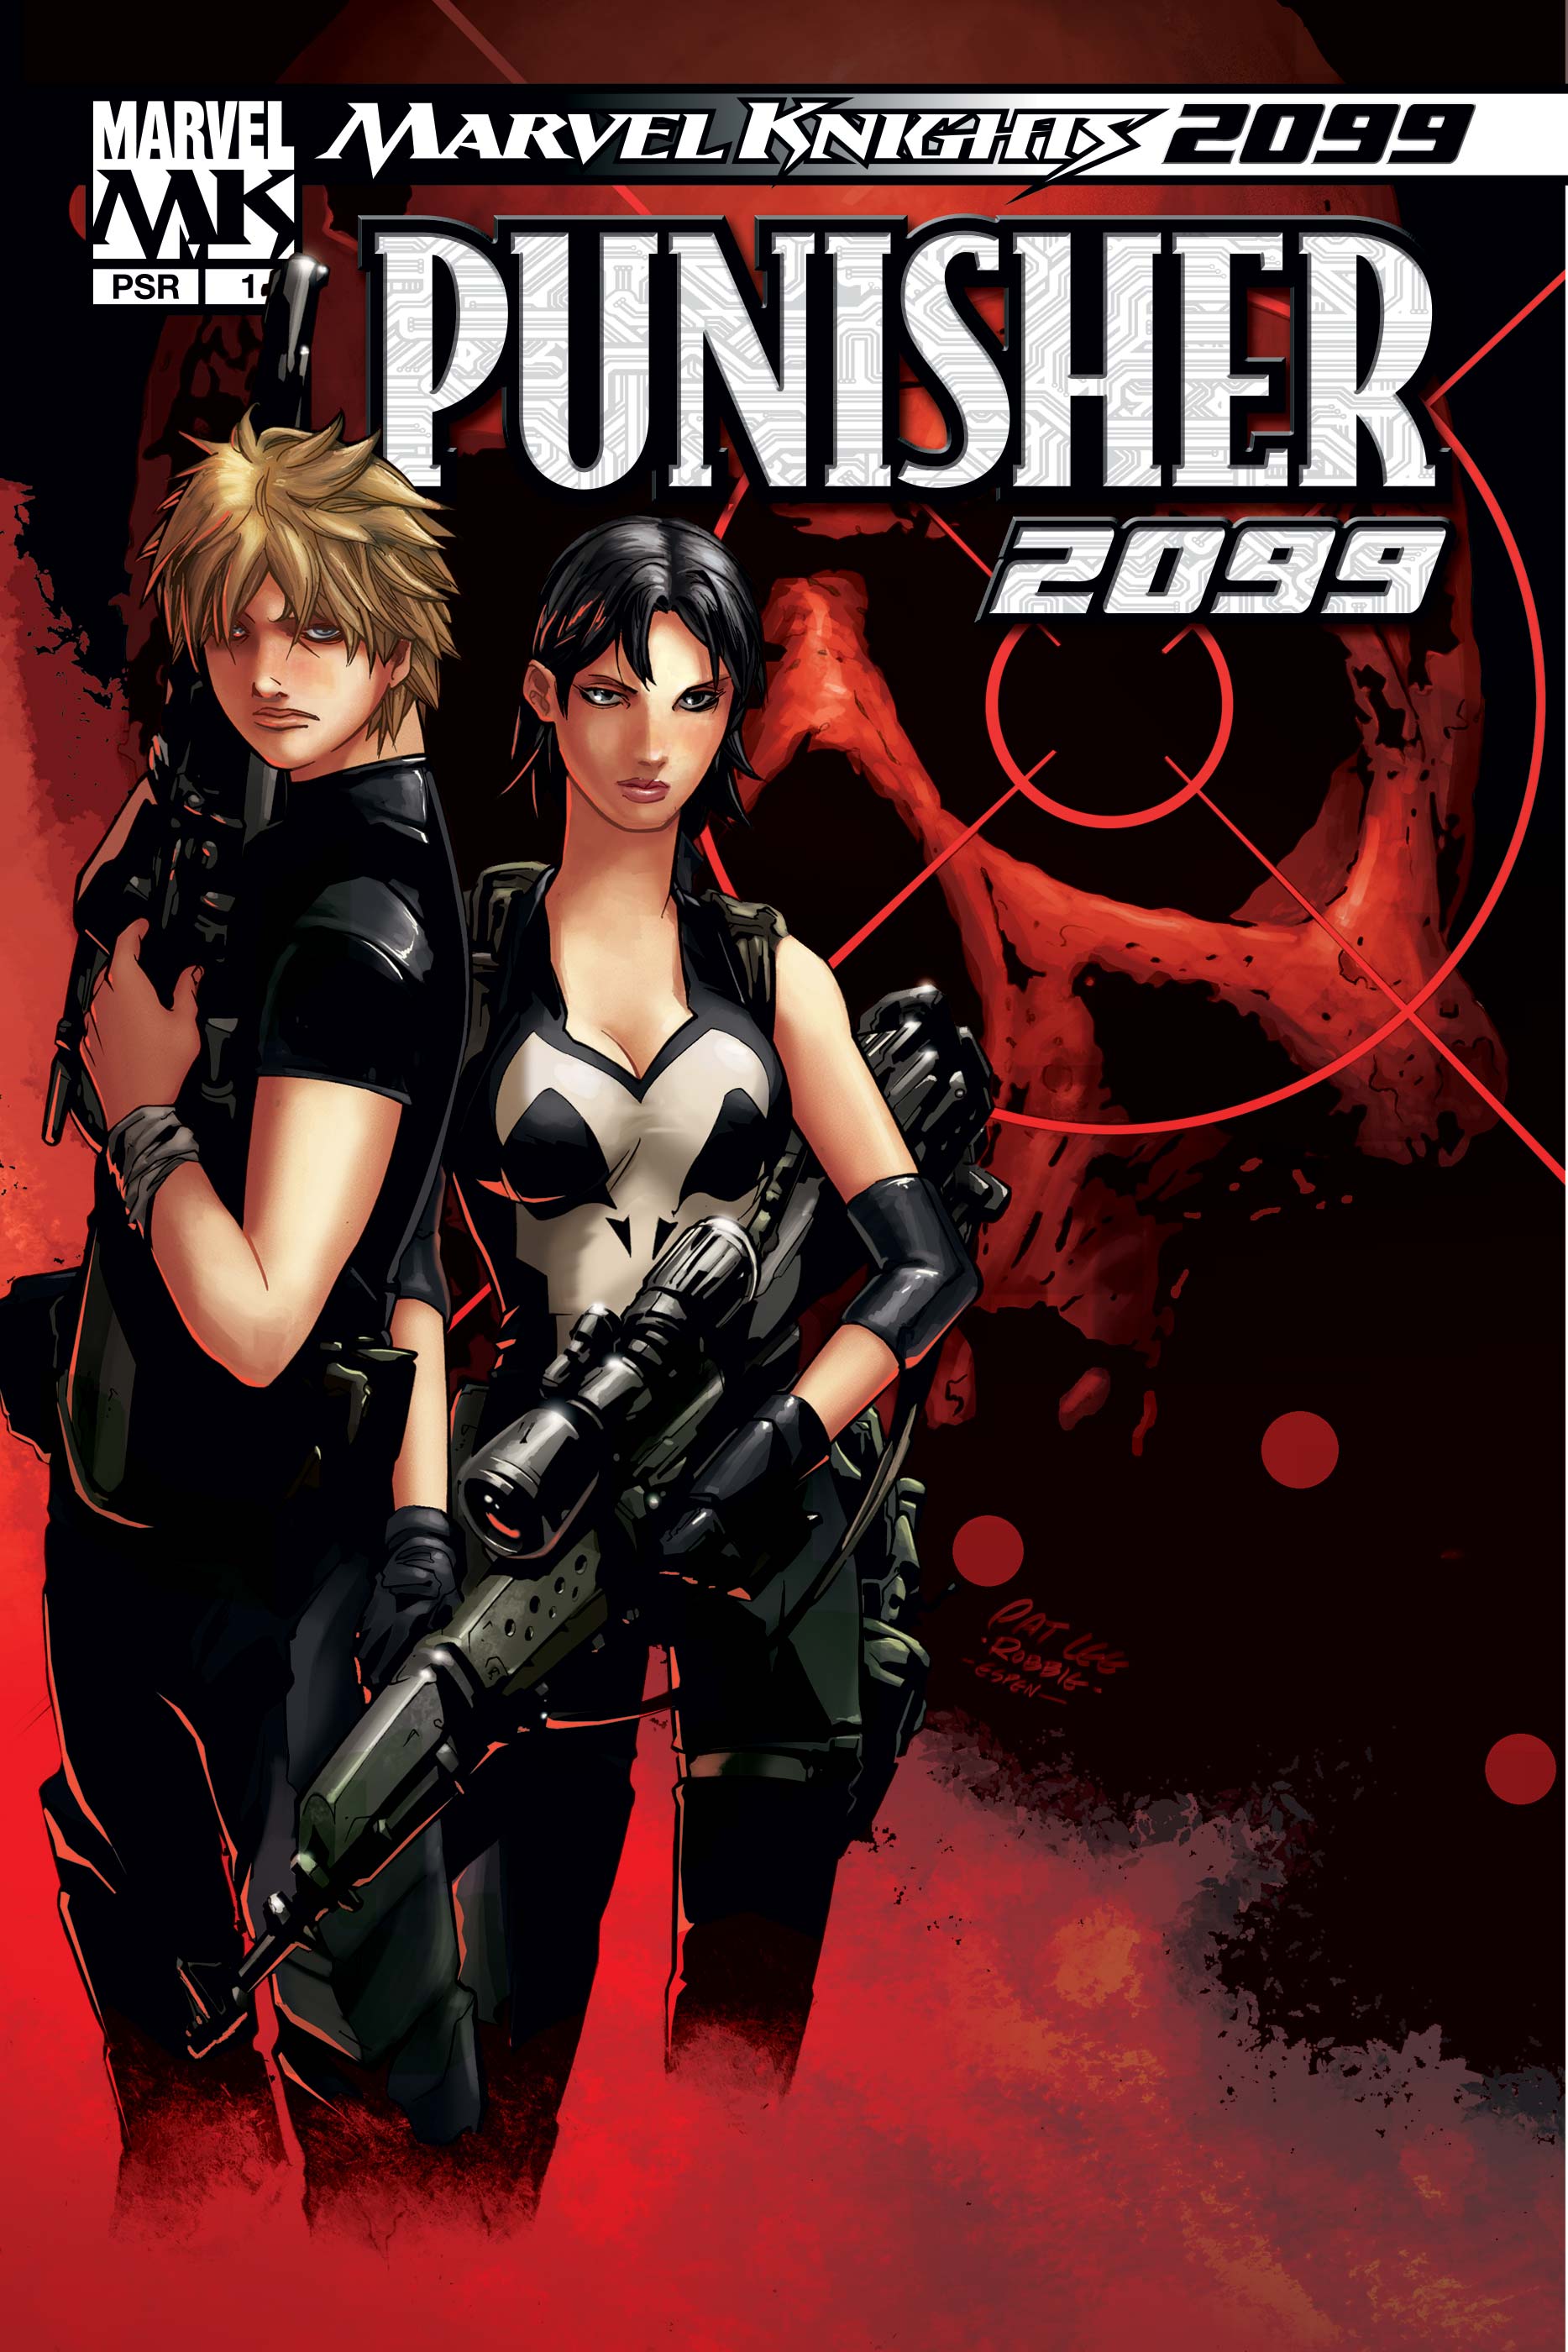 Punisher 2099 (2004) #1